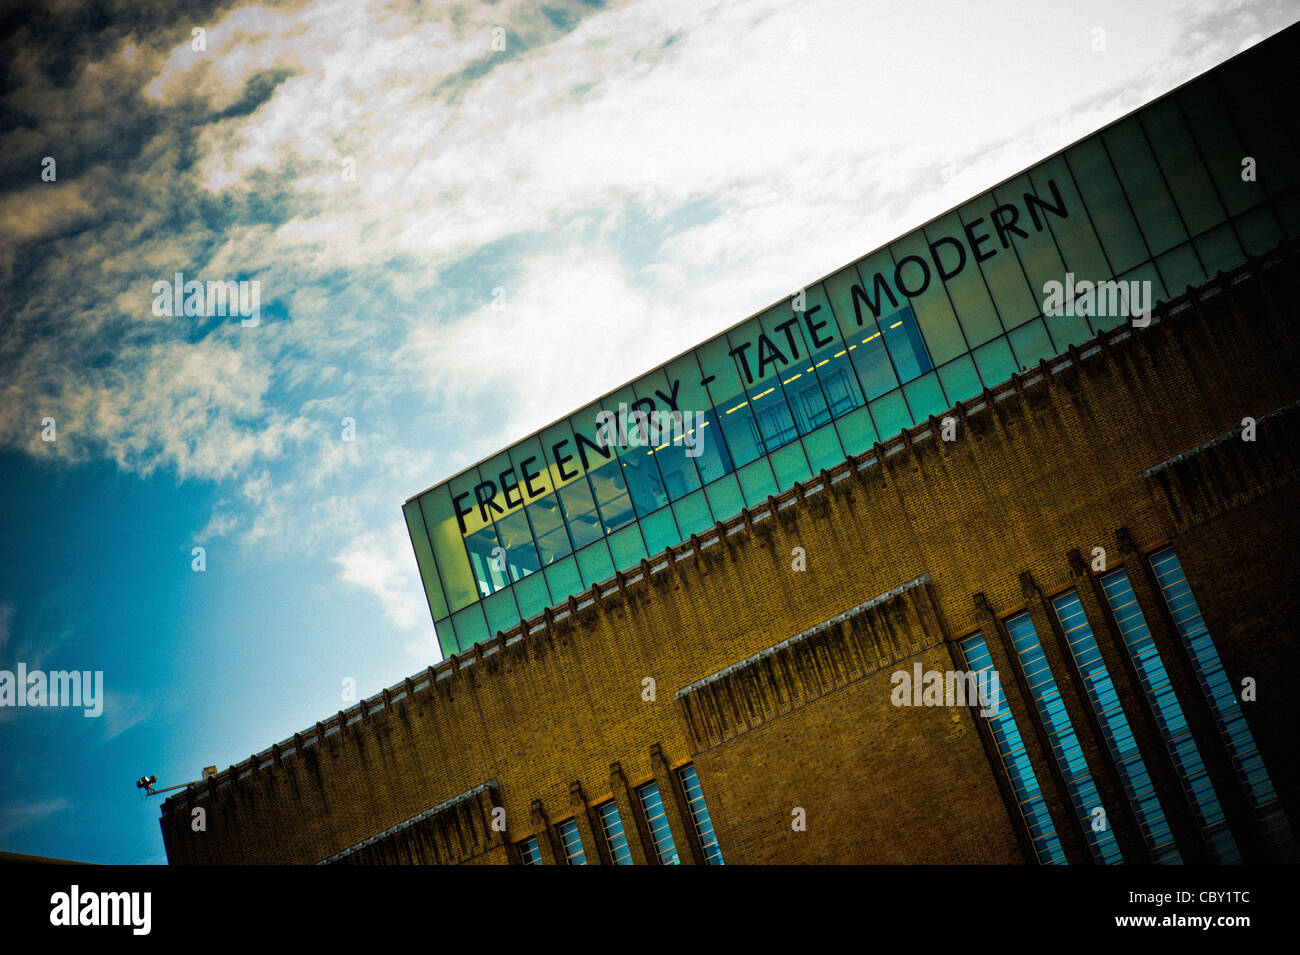 Free Entry - Tate Modern sign, London Stock Photo